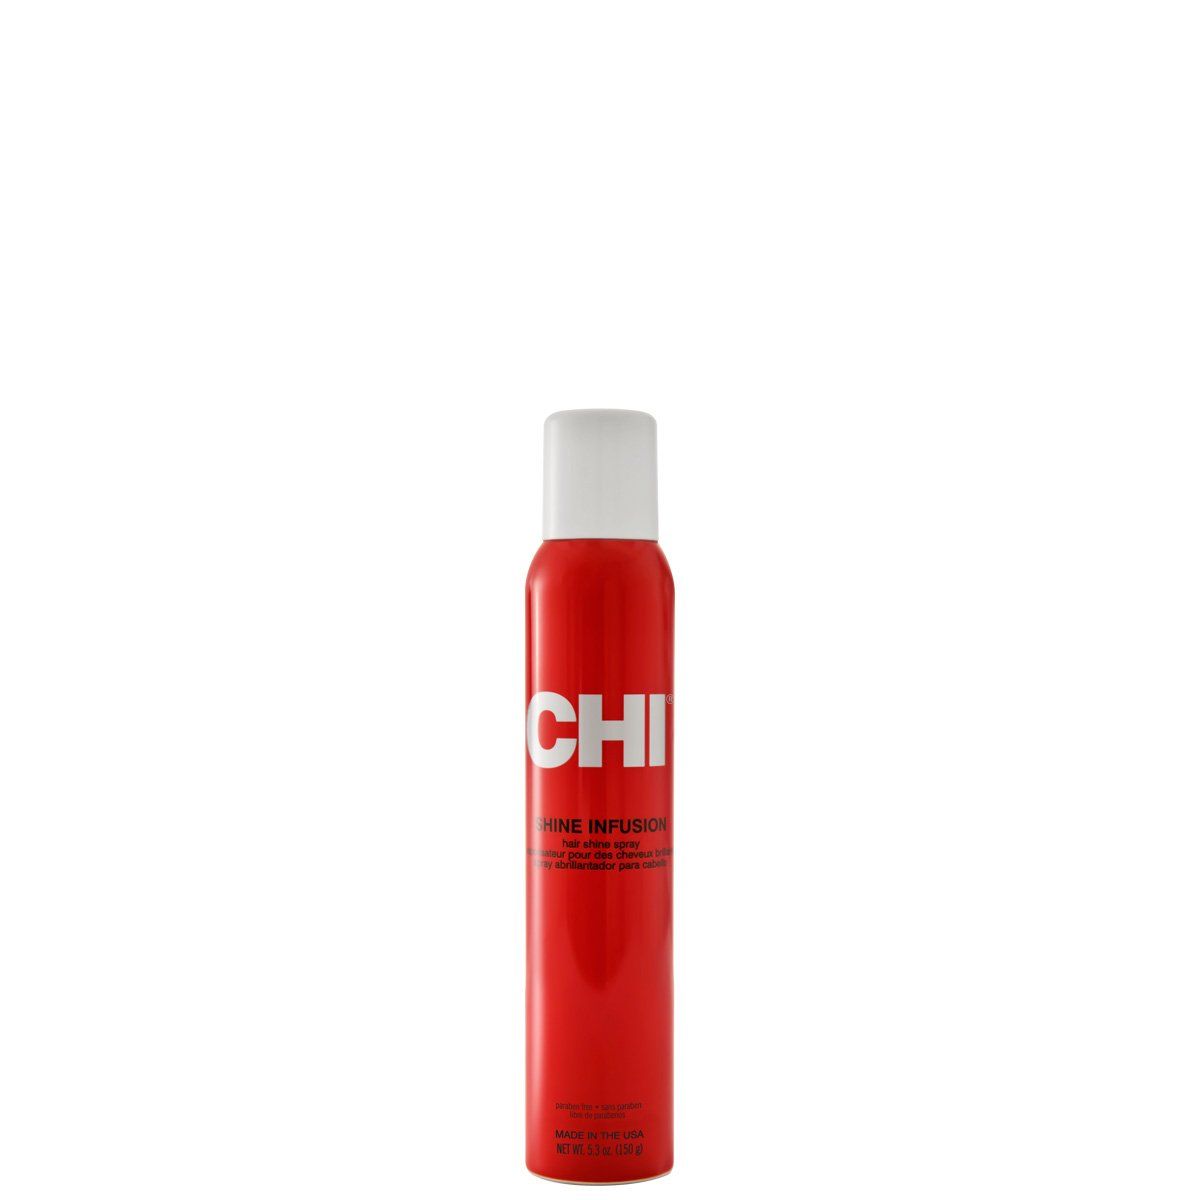 Спрей CHI Styling Shine Infusion Thermal Polishing Spray блеск инфра, 150 г блеск для губ focallure plump high shine lip glow тон 12 fire opal